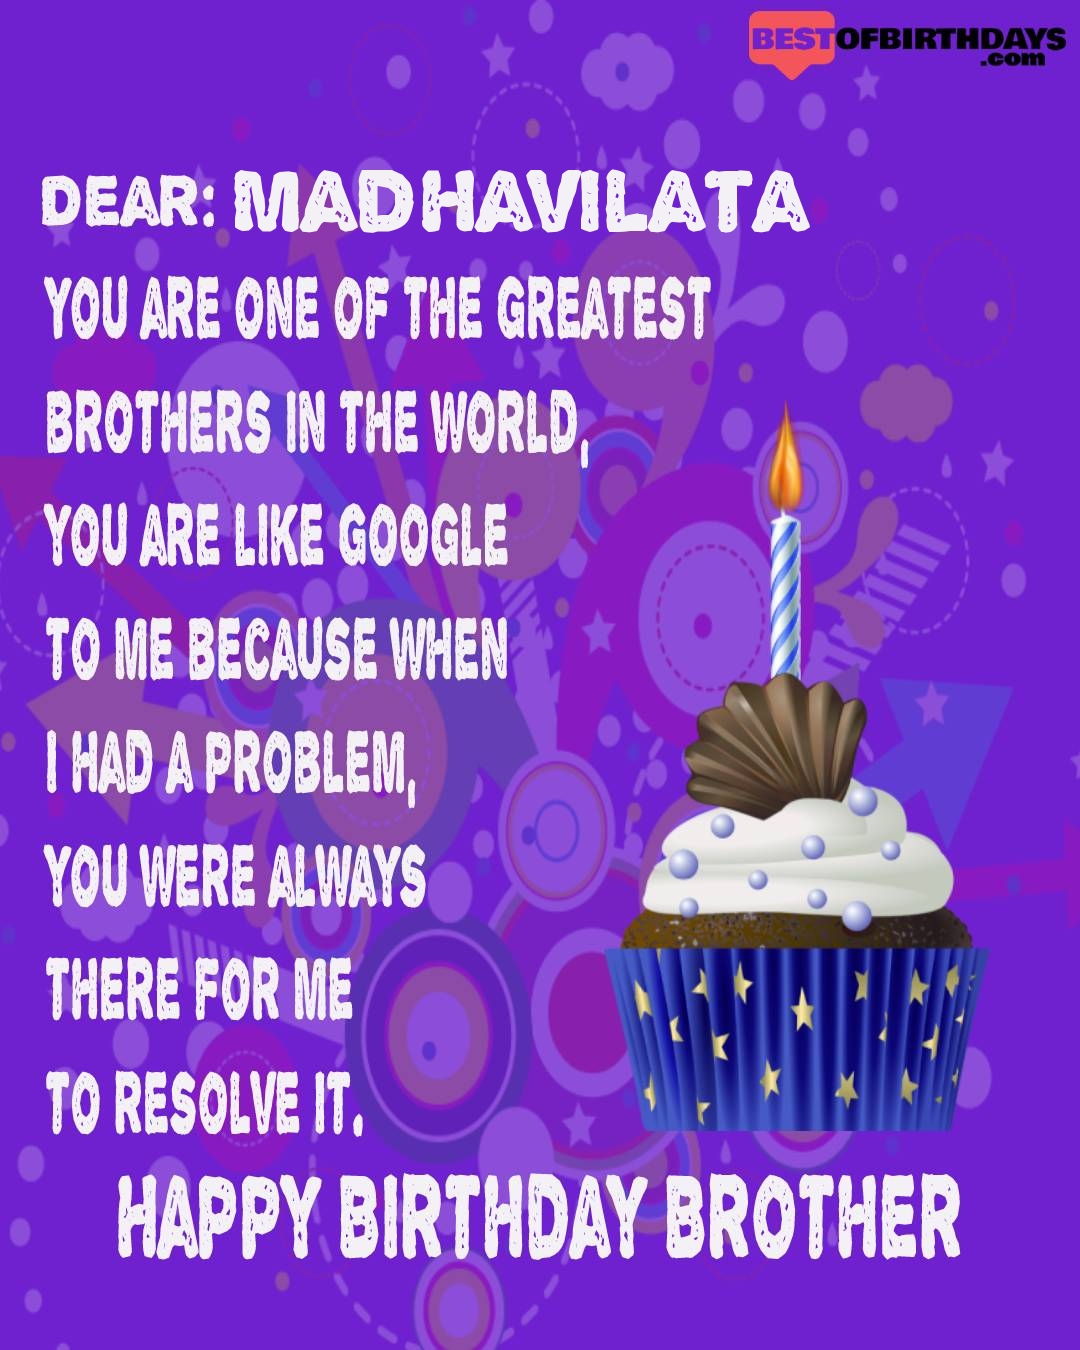 Happy birthday madhavilata bhai brother bro